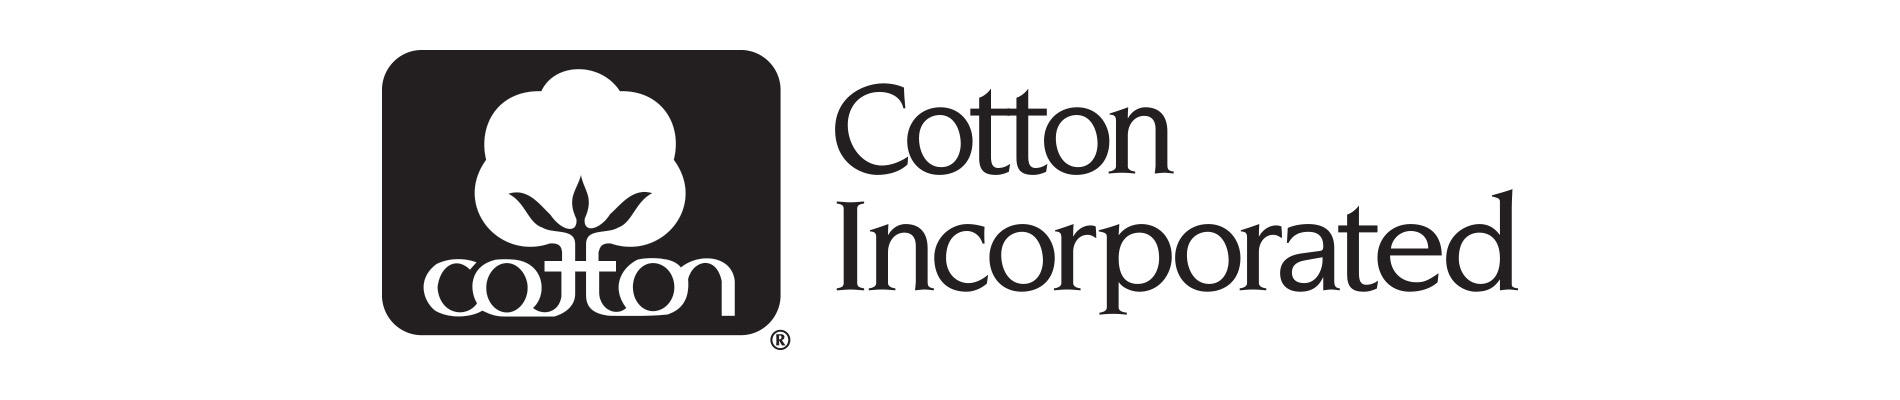 Cotton Inc logo